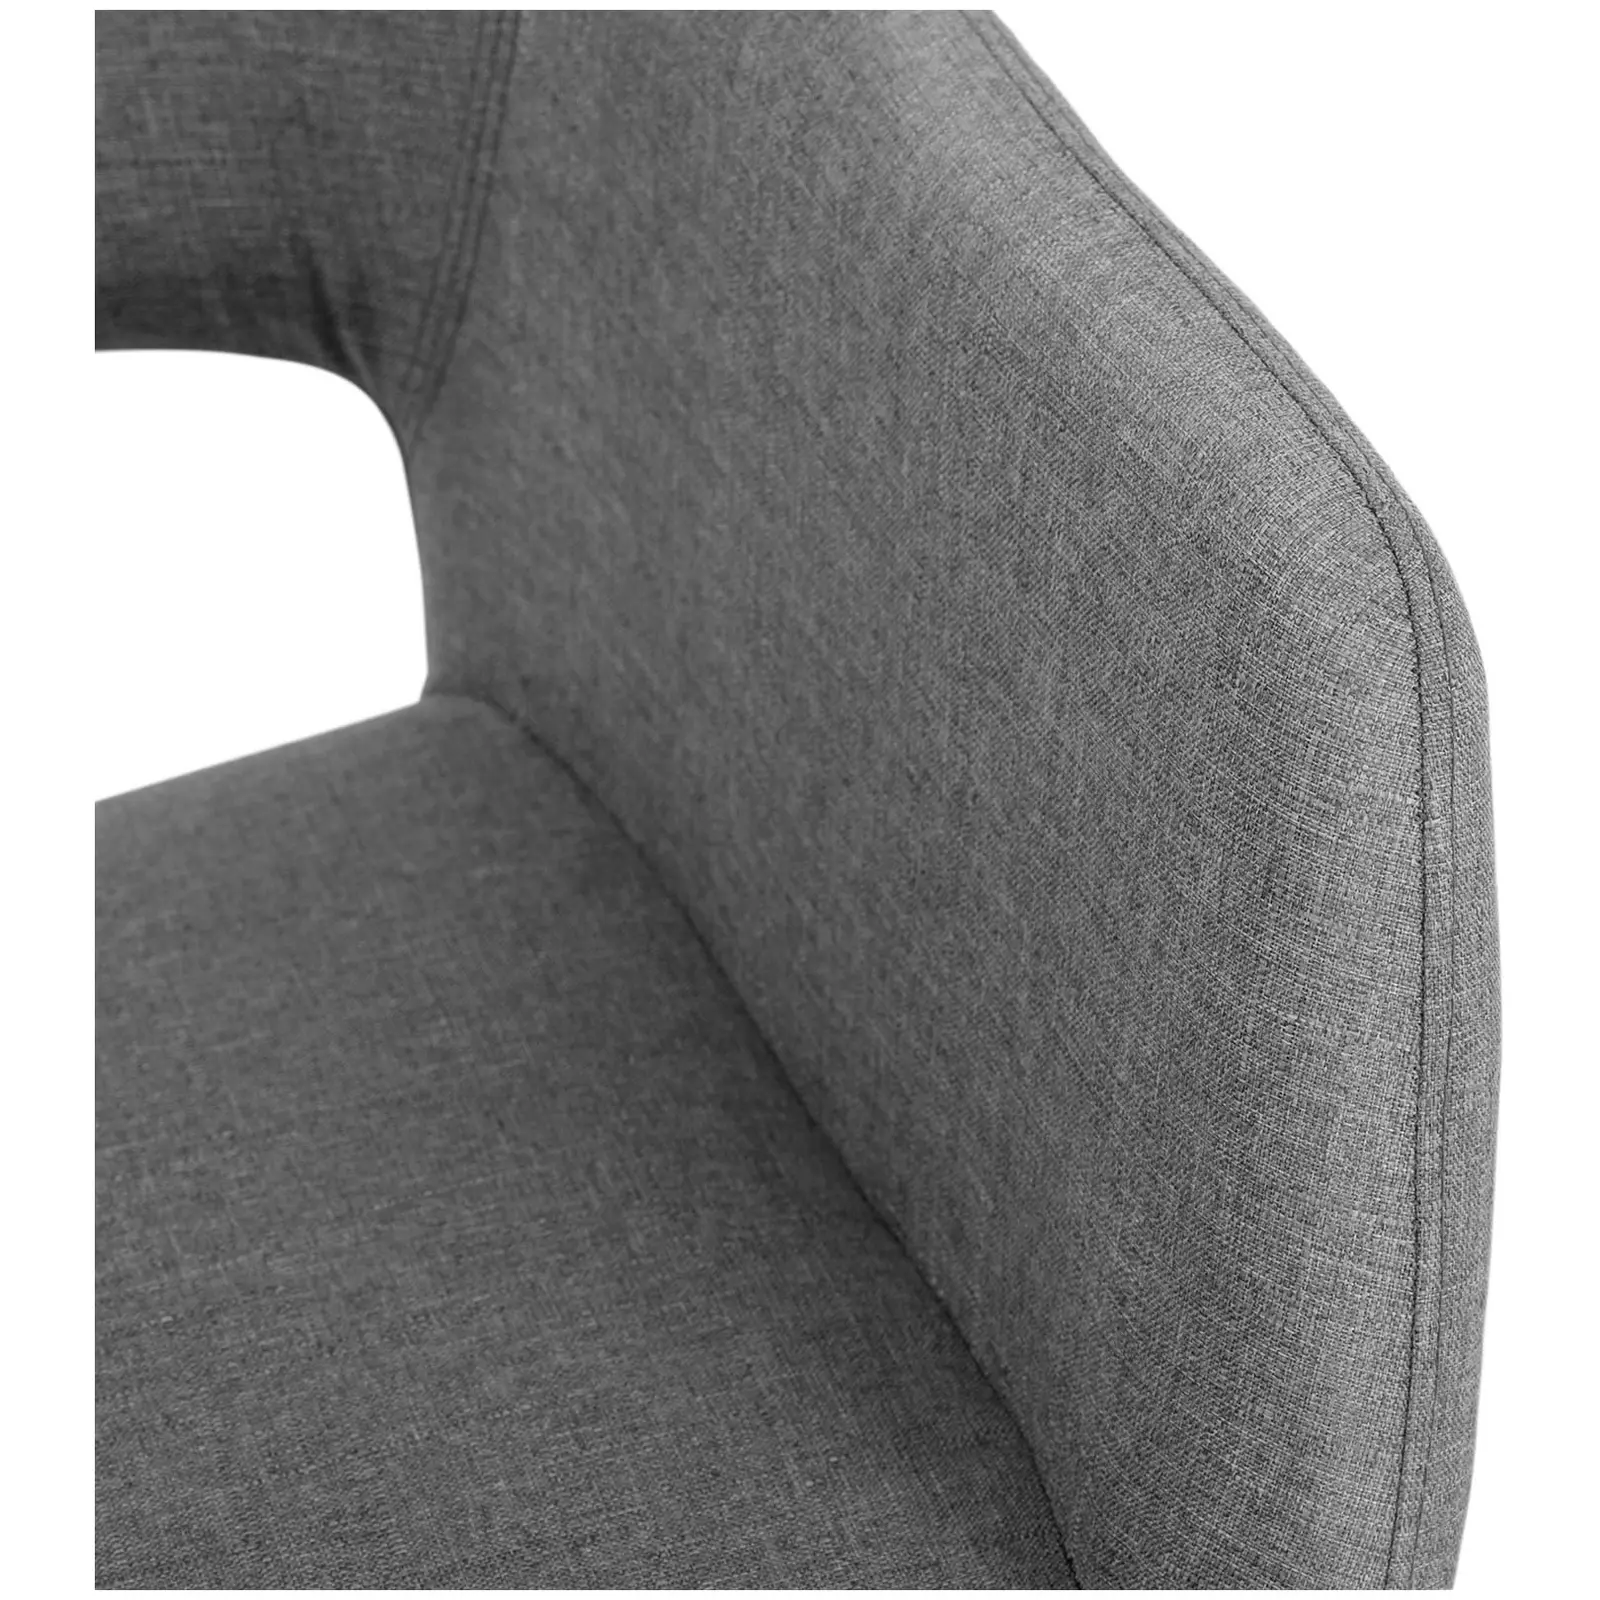 Lænestol - maks. 160 kg - sæde 42 x 47 cm - grå